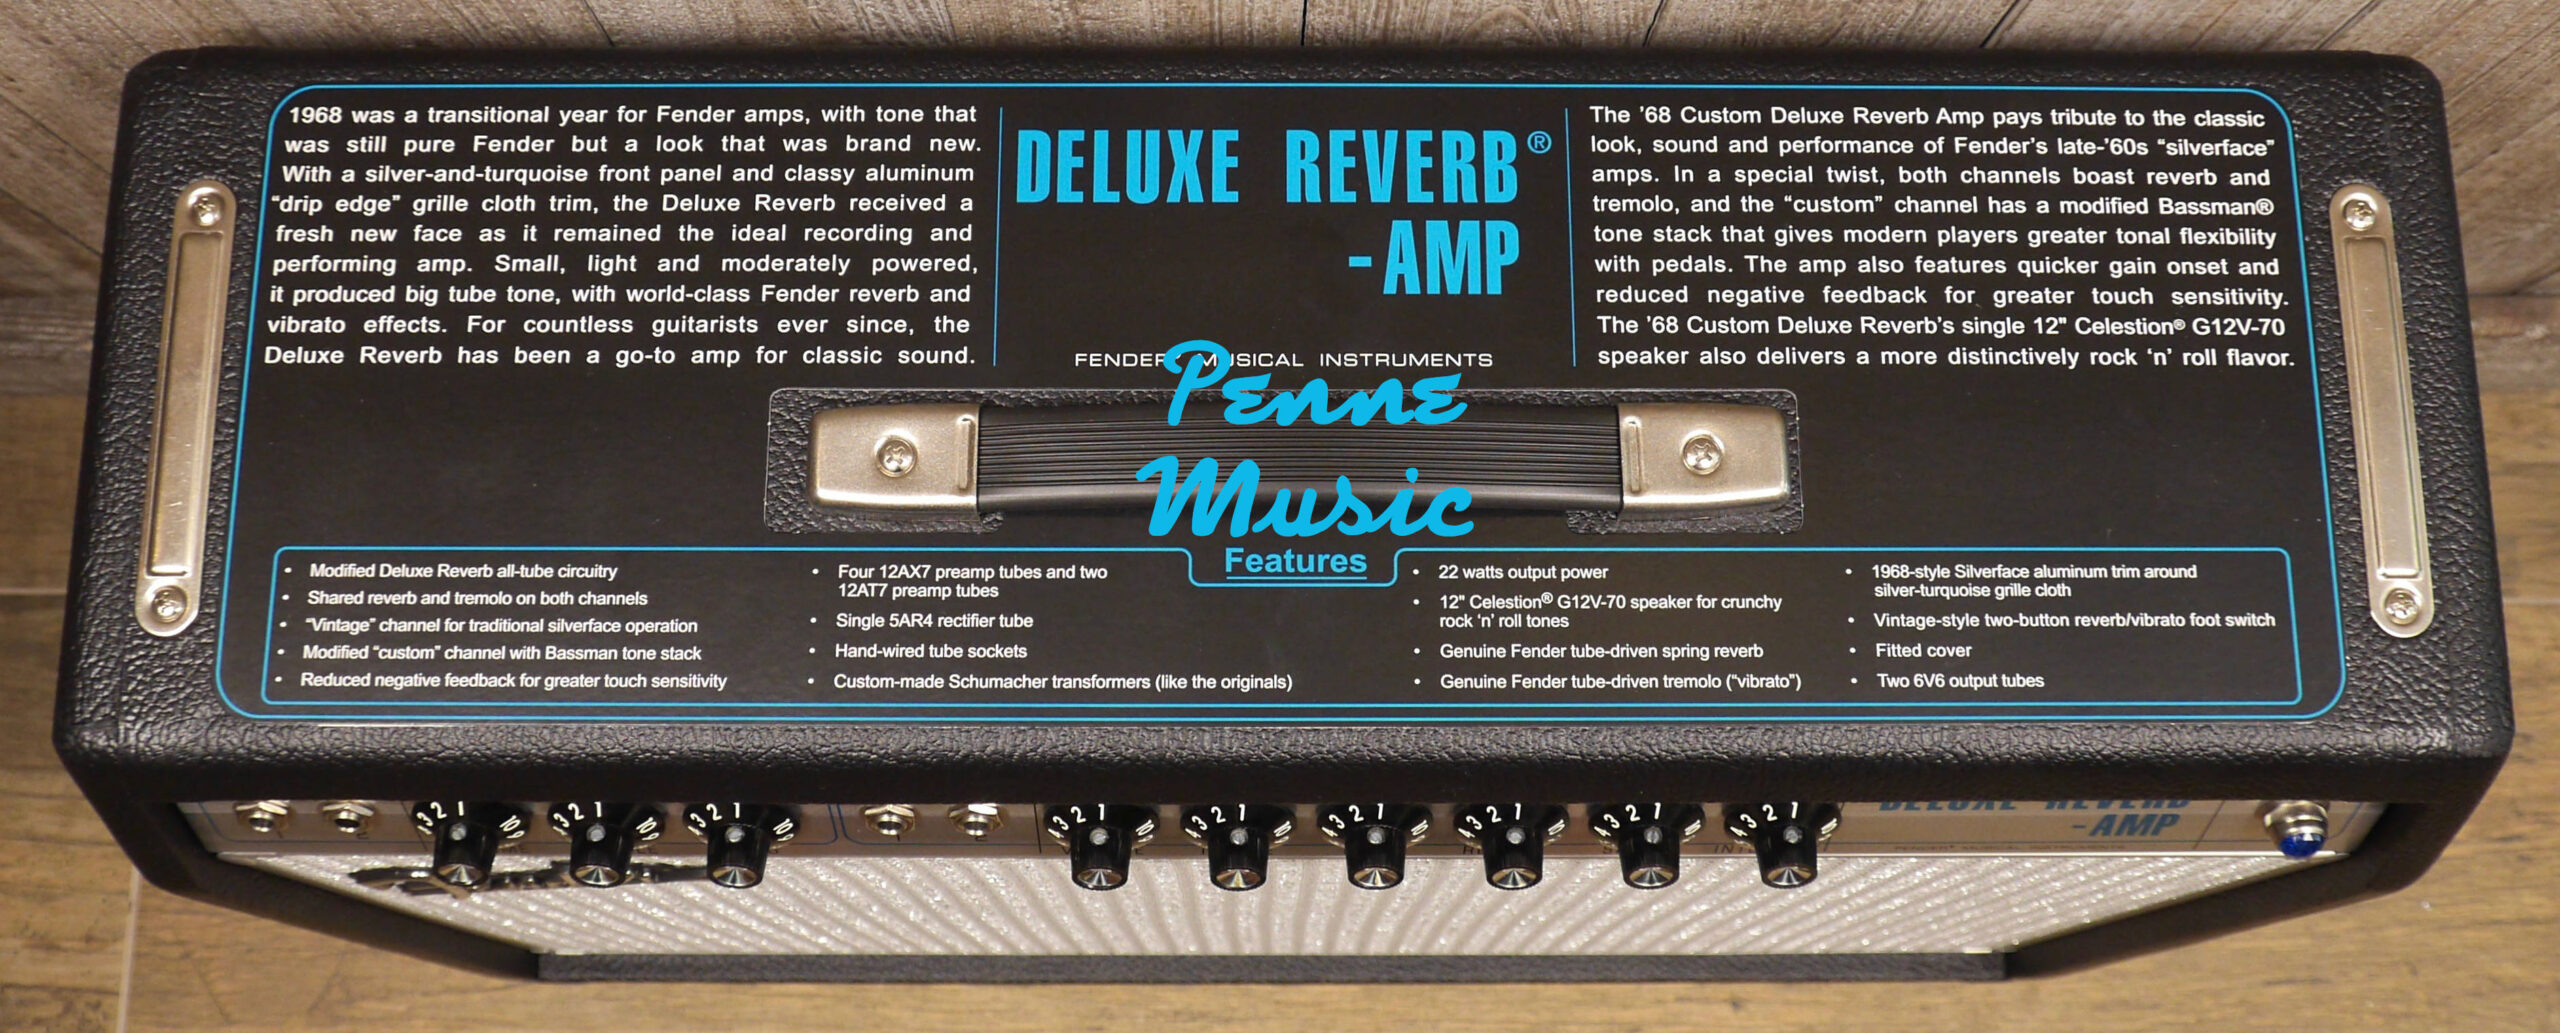 Fender 68 Custom Deluxe Reverb amplificatore valvolare chitarra 22 watt 1x12" Celestion (con footswitch e cover) 2274006000 Made in Mexico